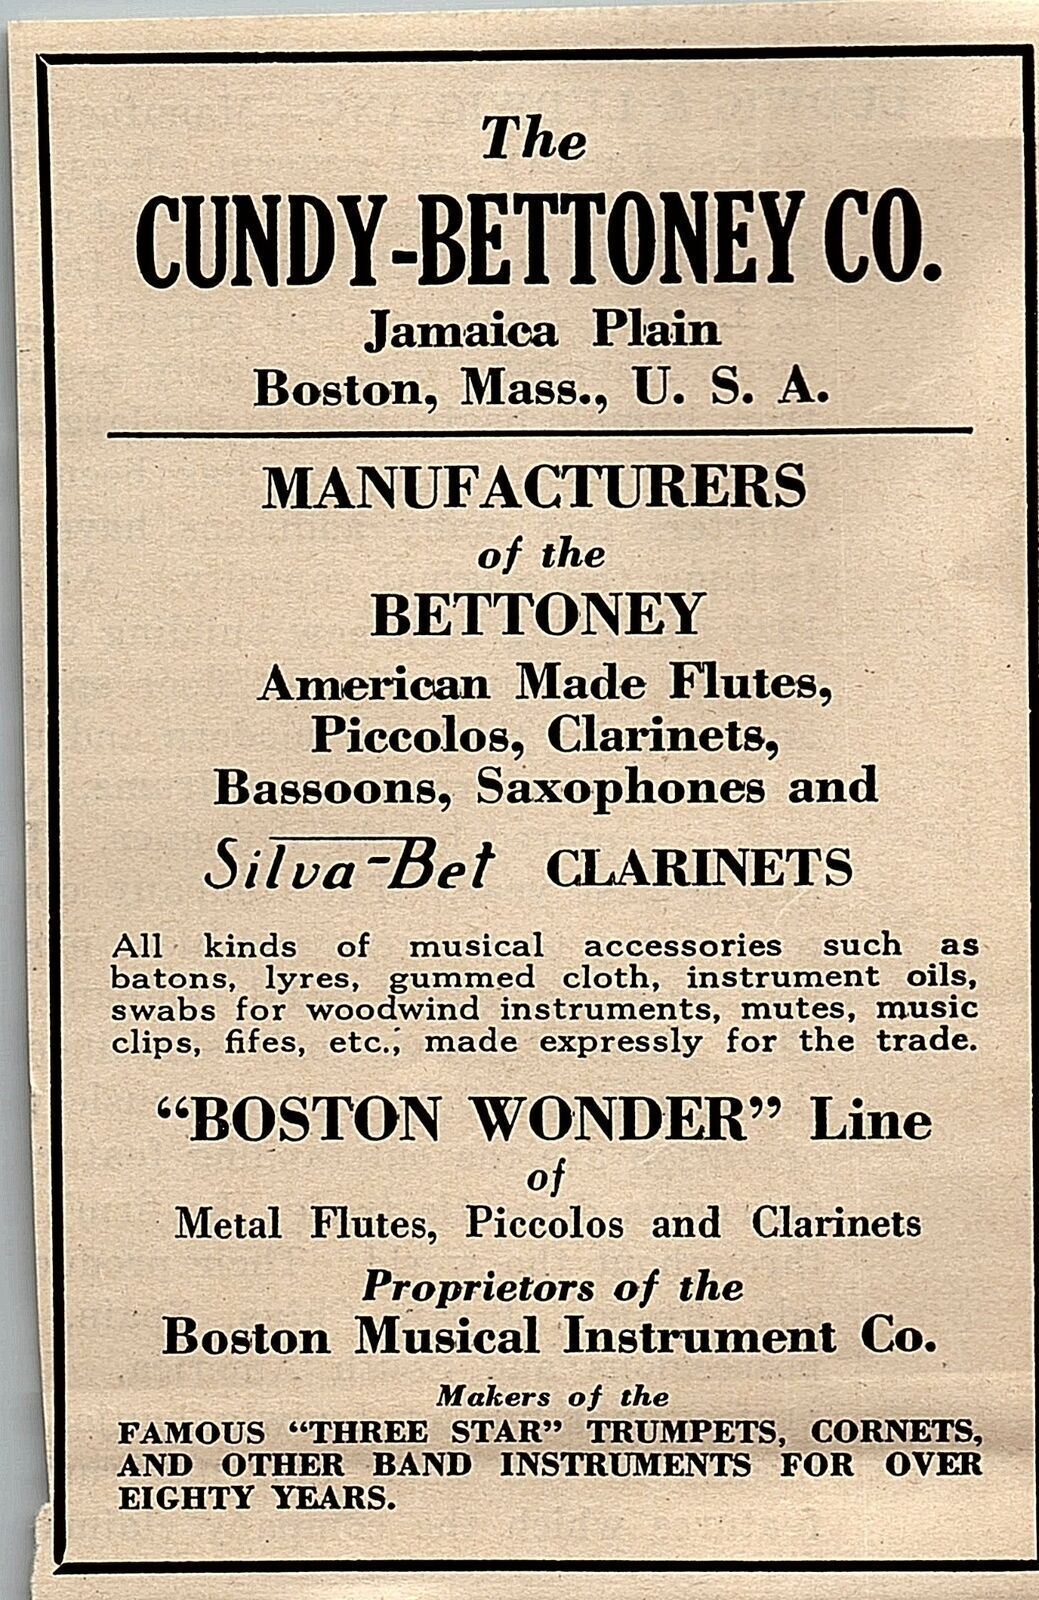 1927 SILVA-BET CLARINETS CUNDY-BETTONEY INSTRUMENTS VINTAGE ADVERTISMENT 37-55